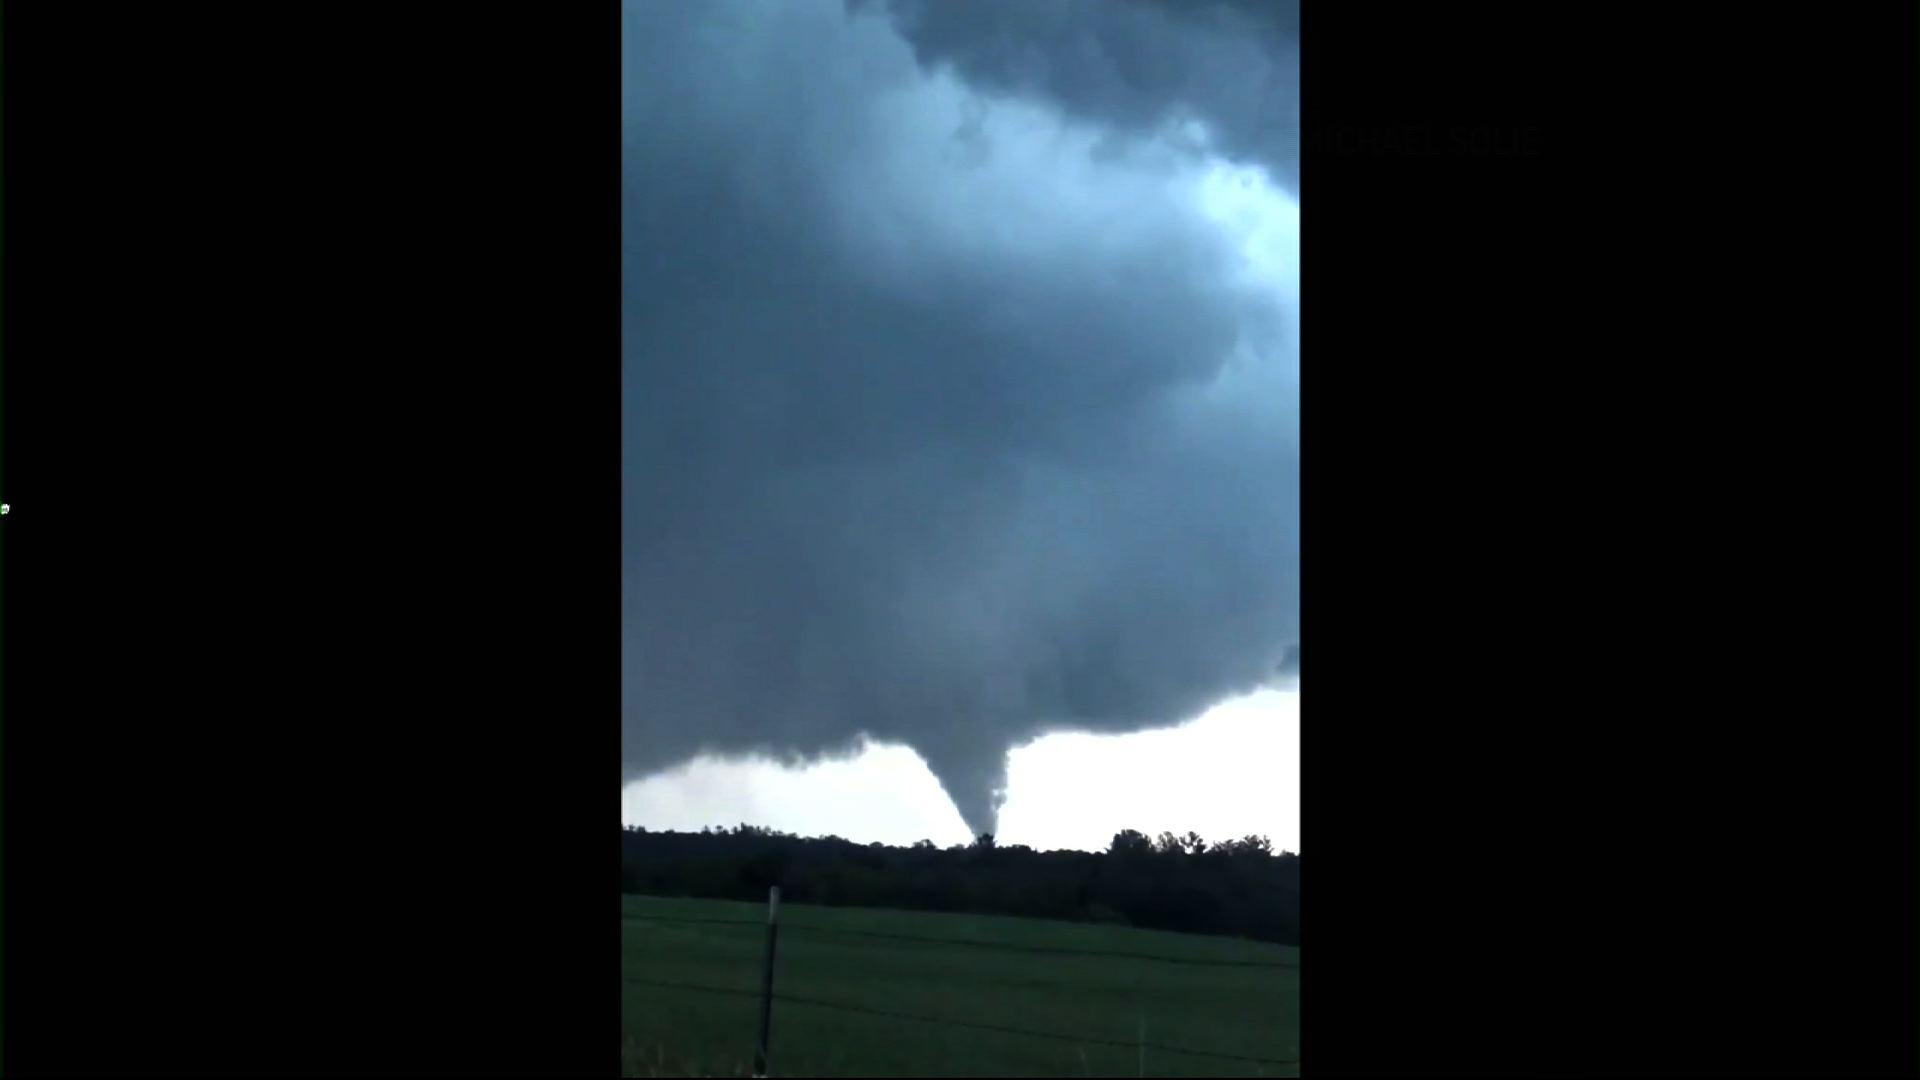 Video shows Minnesota tornado, damage